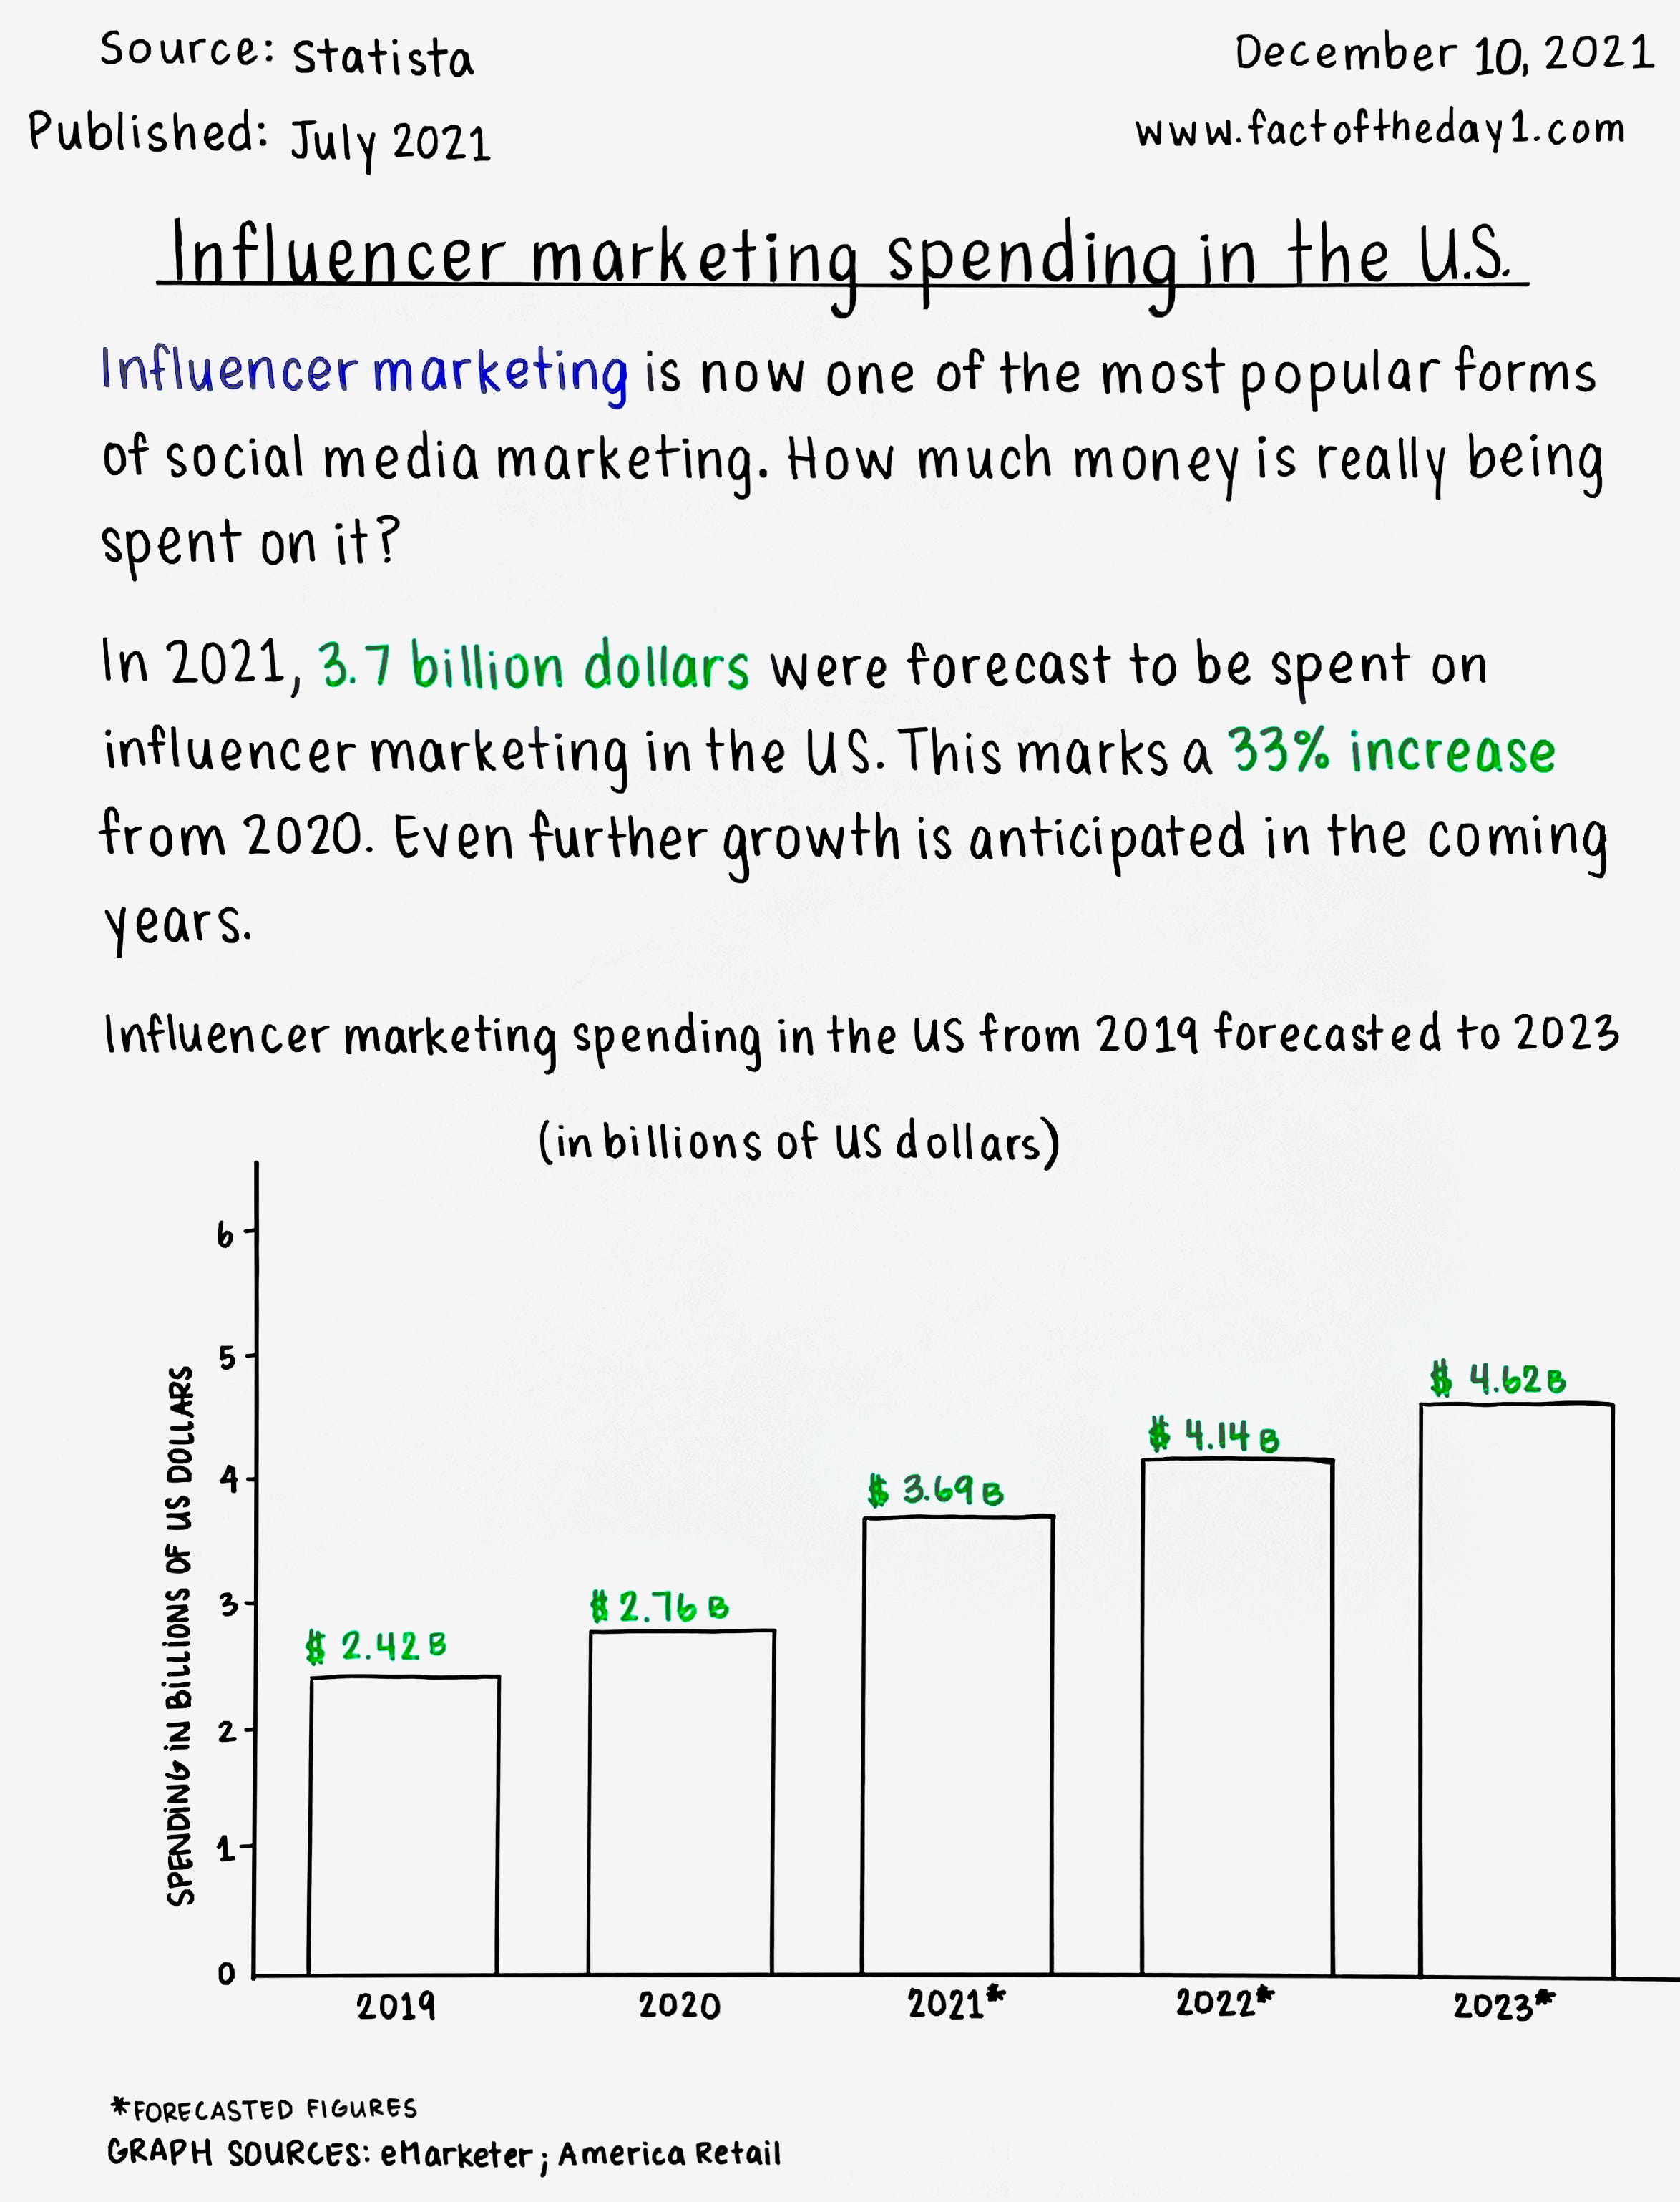 December 10: Influencer marketing spending in the US